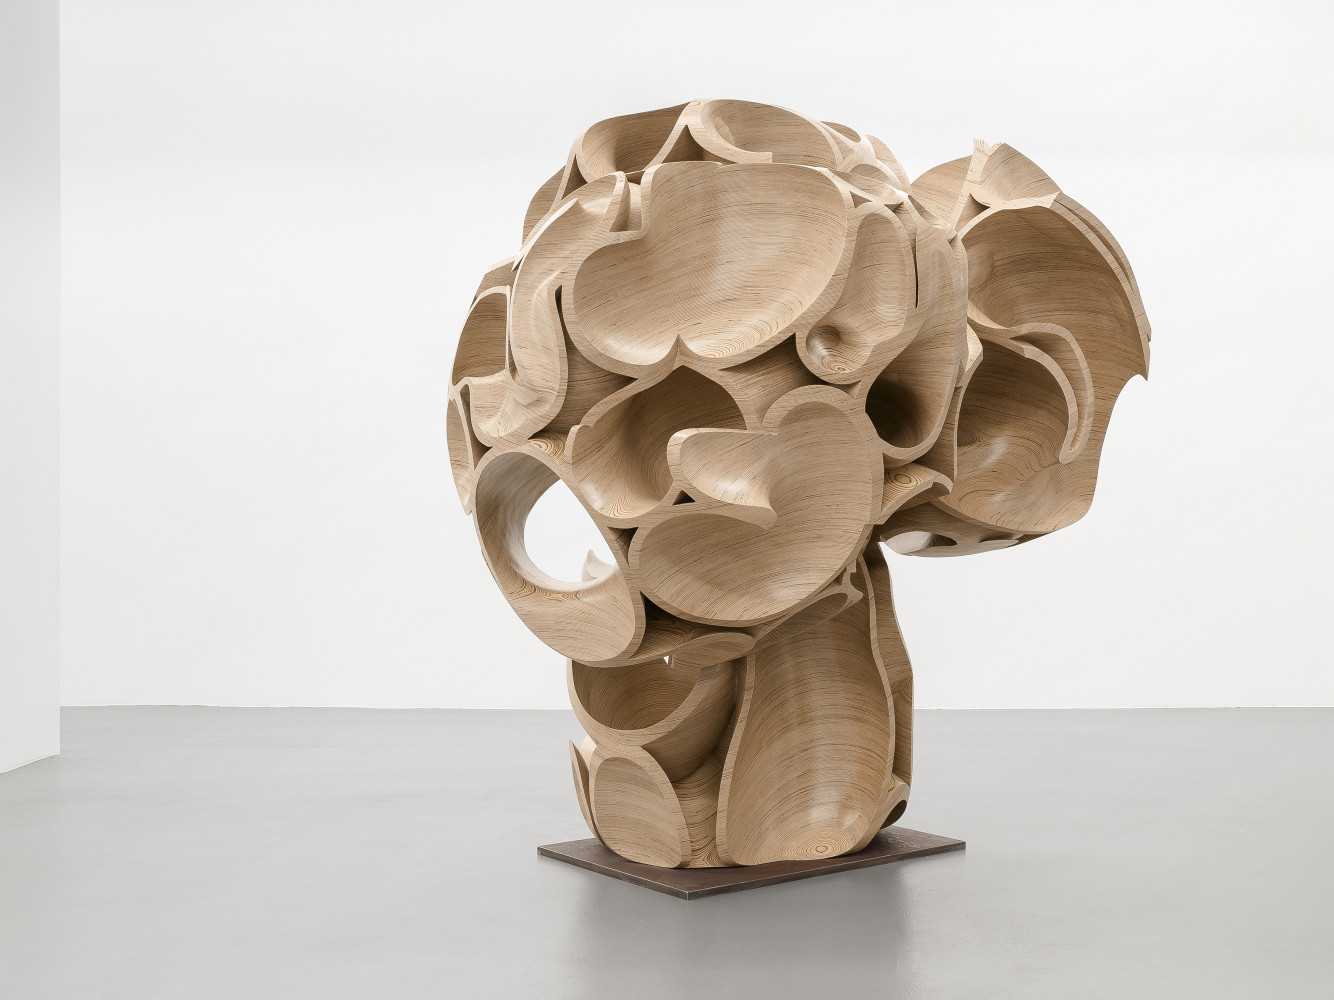 Tony Cragg, untitled (multiple skull), 201, wood, sculpture